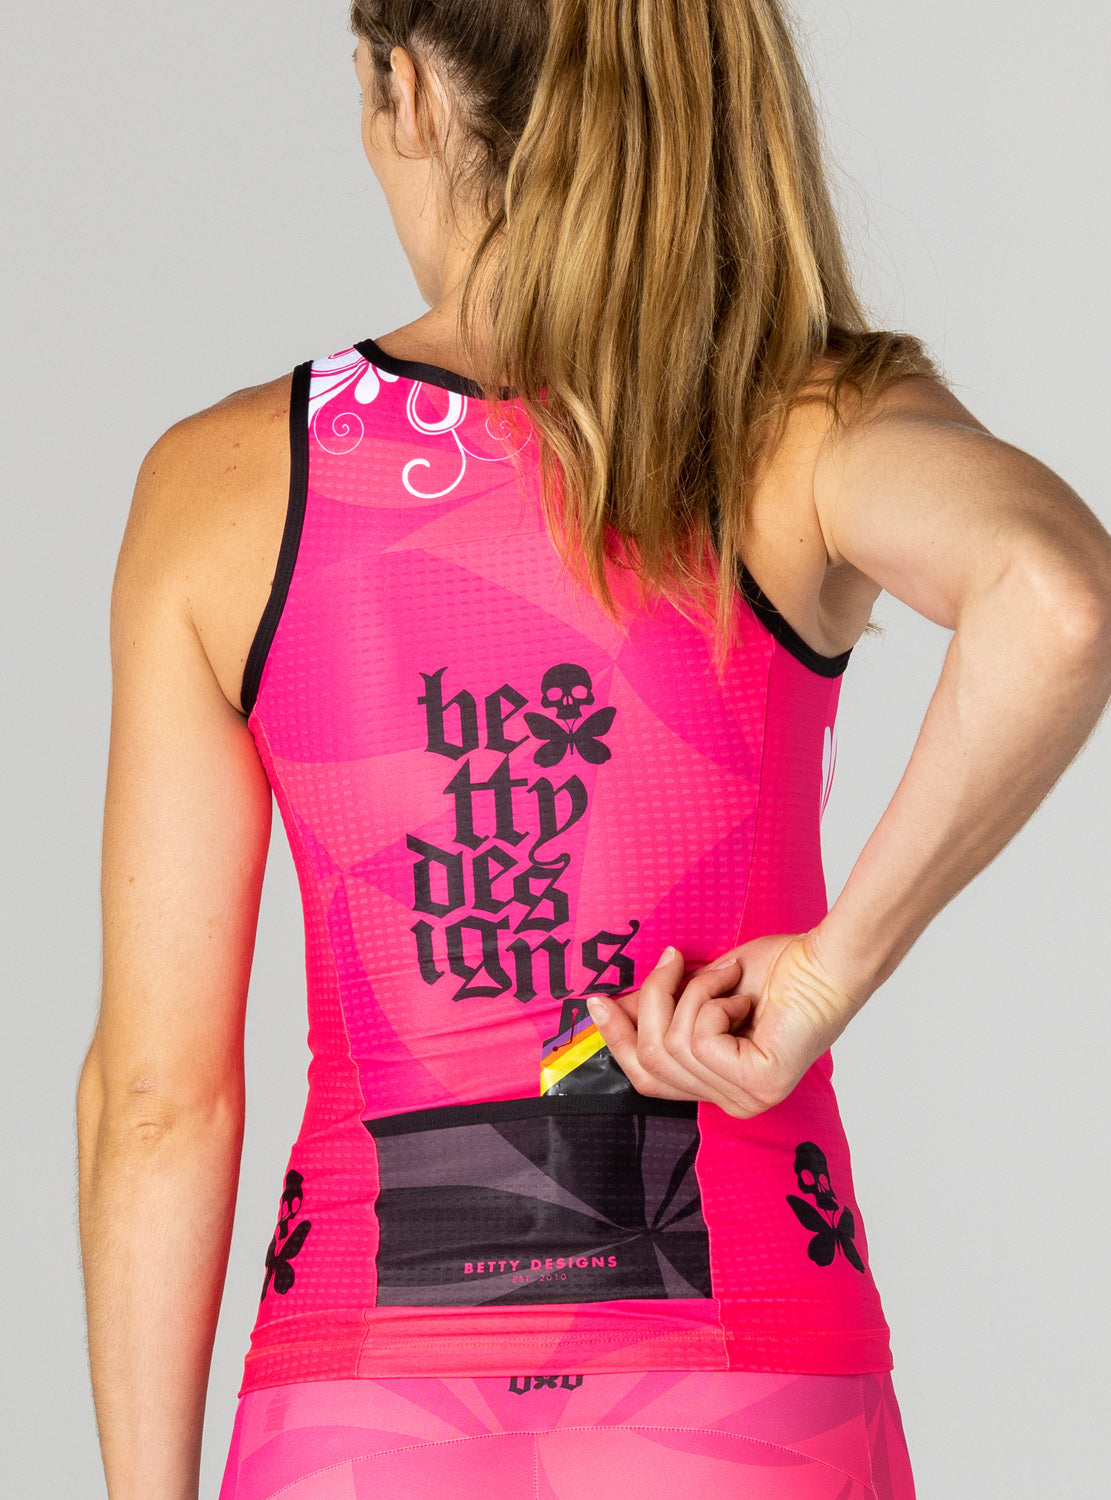 betty designs pink signature sleeveless triathlon top for women